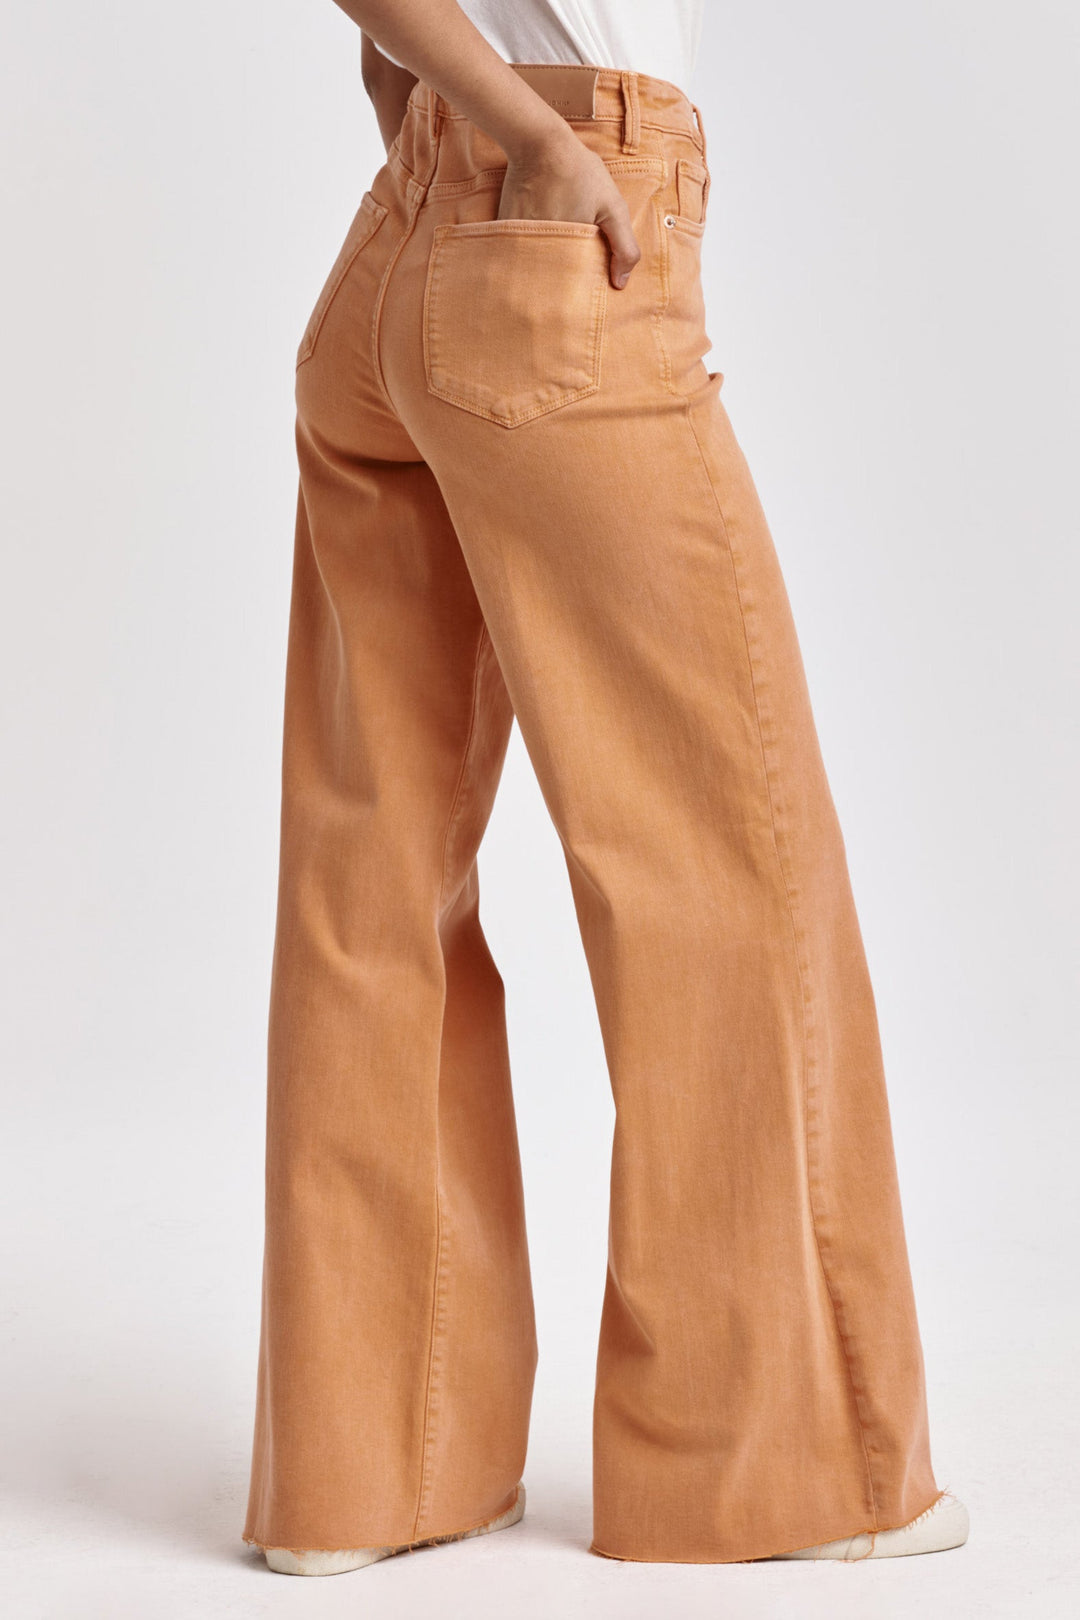 fiona-mid-super-high-rise-wide-leg-jeans-apricot-crush